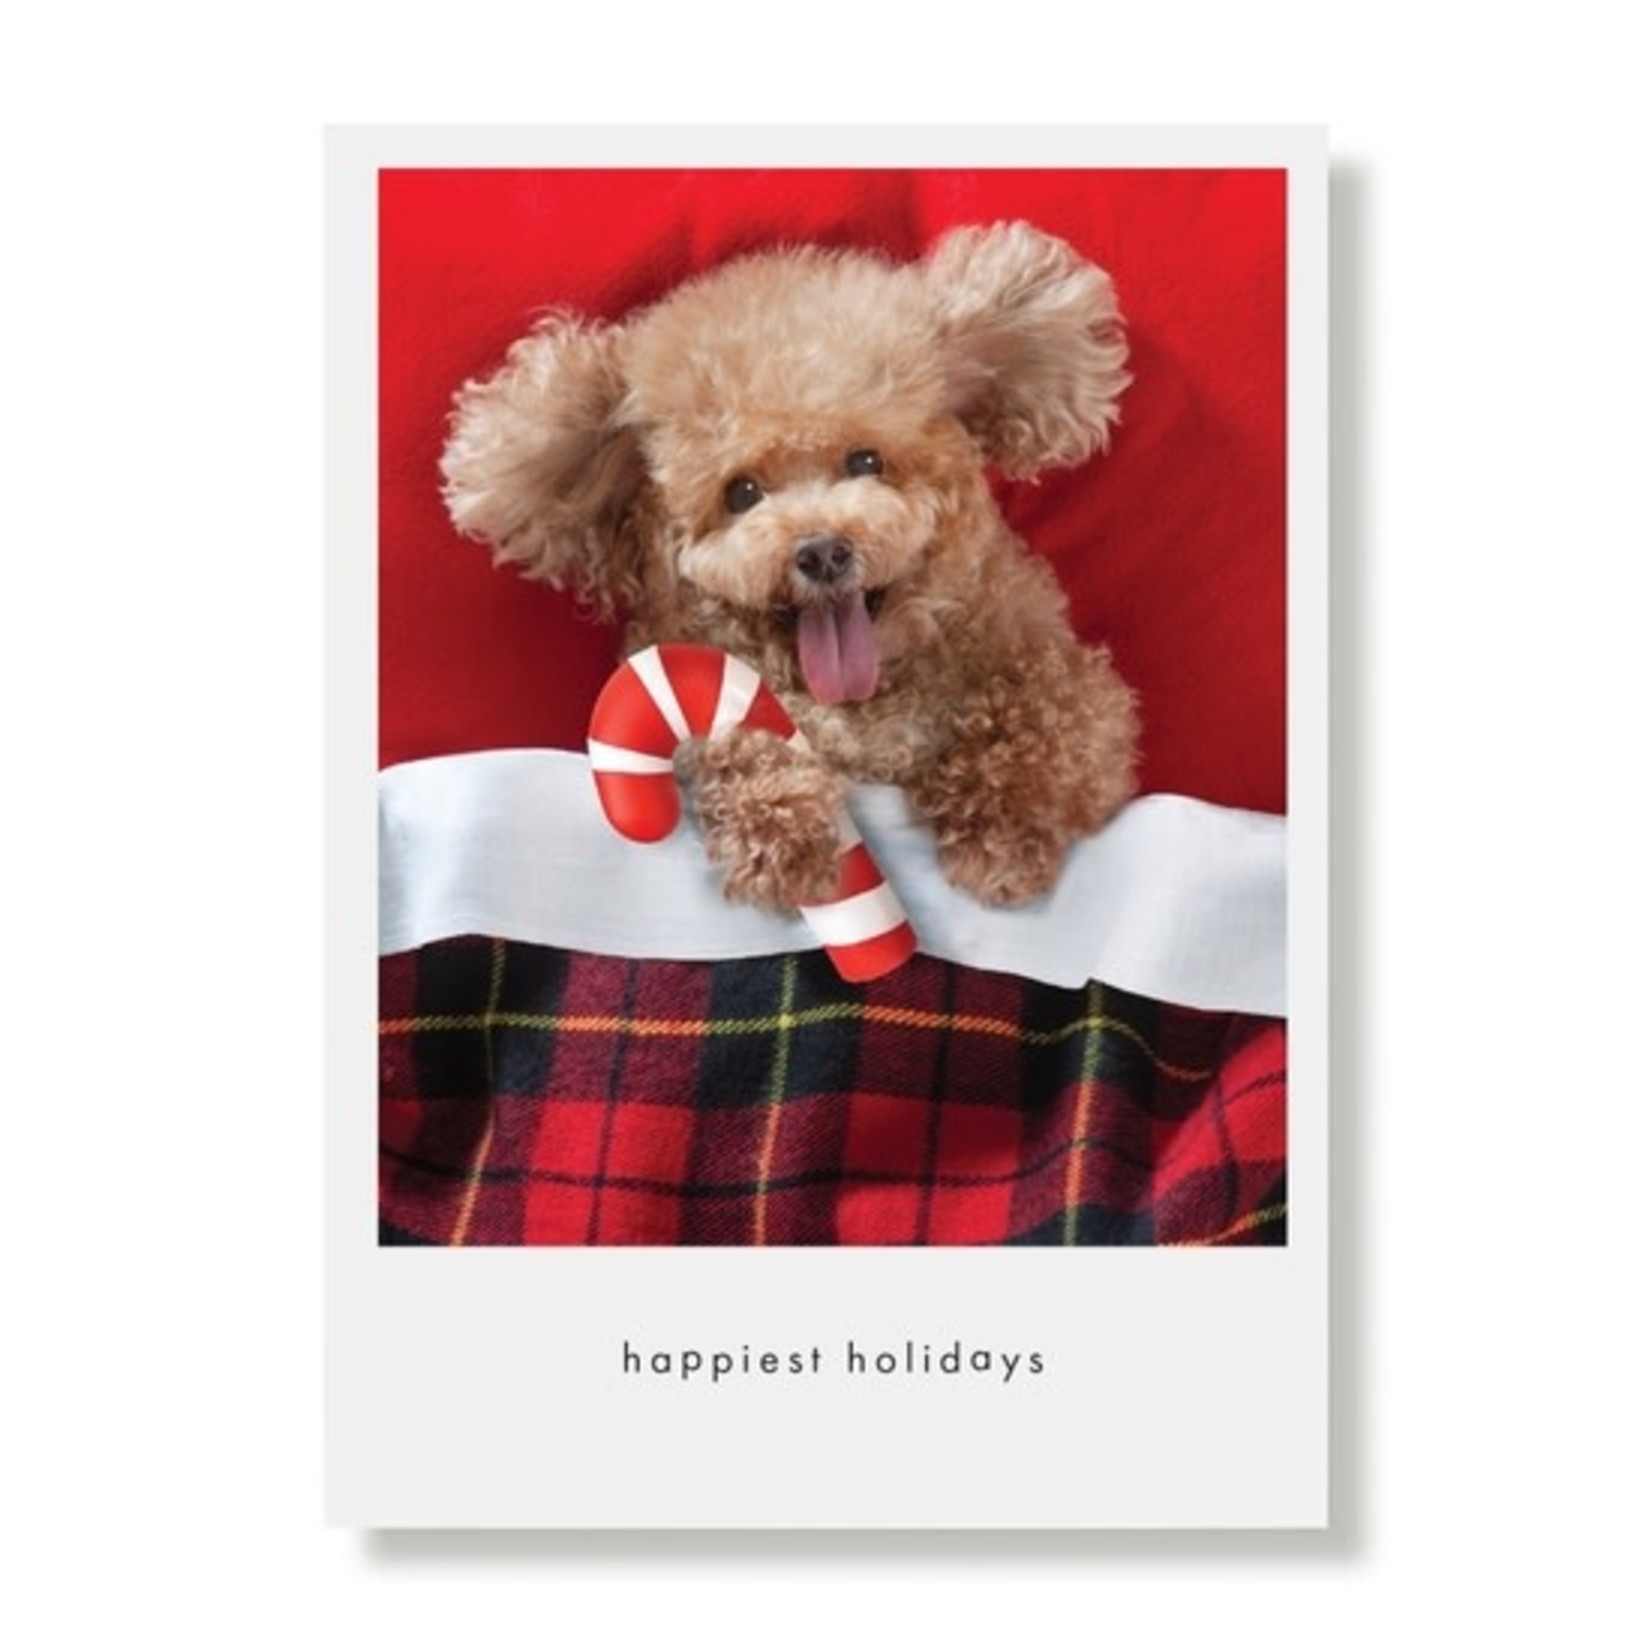 Greeting Cards - Christmas Bonzie Candy Cane